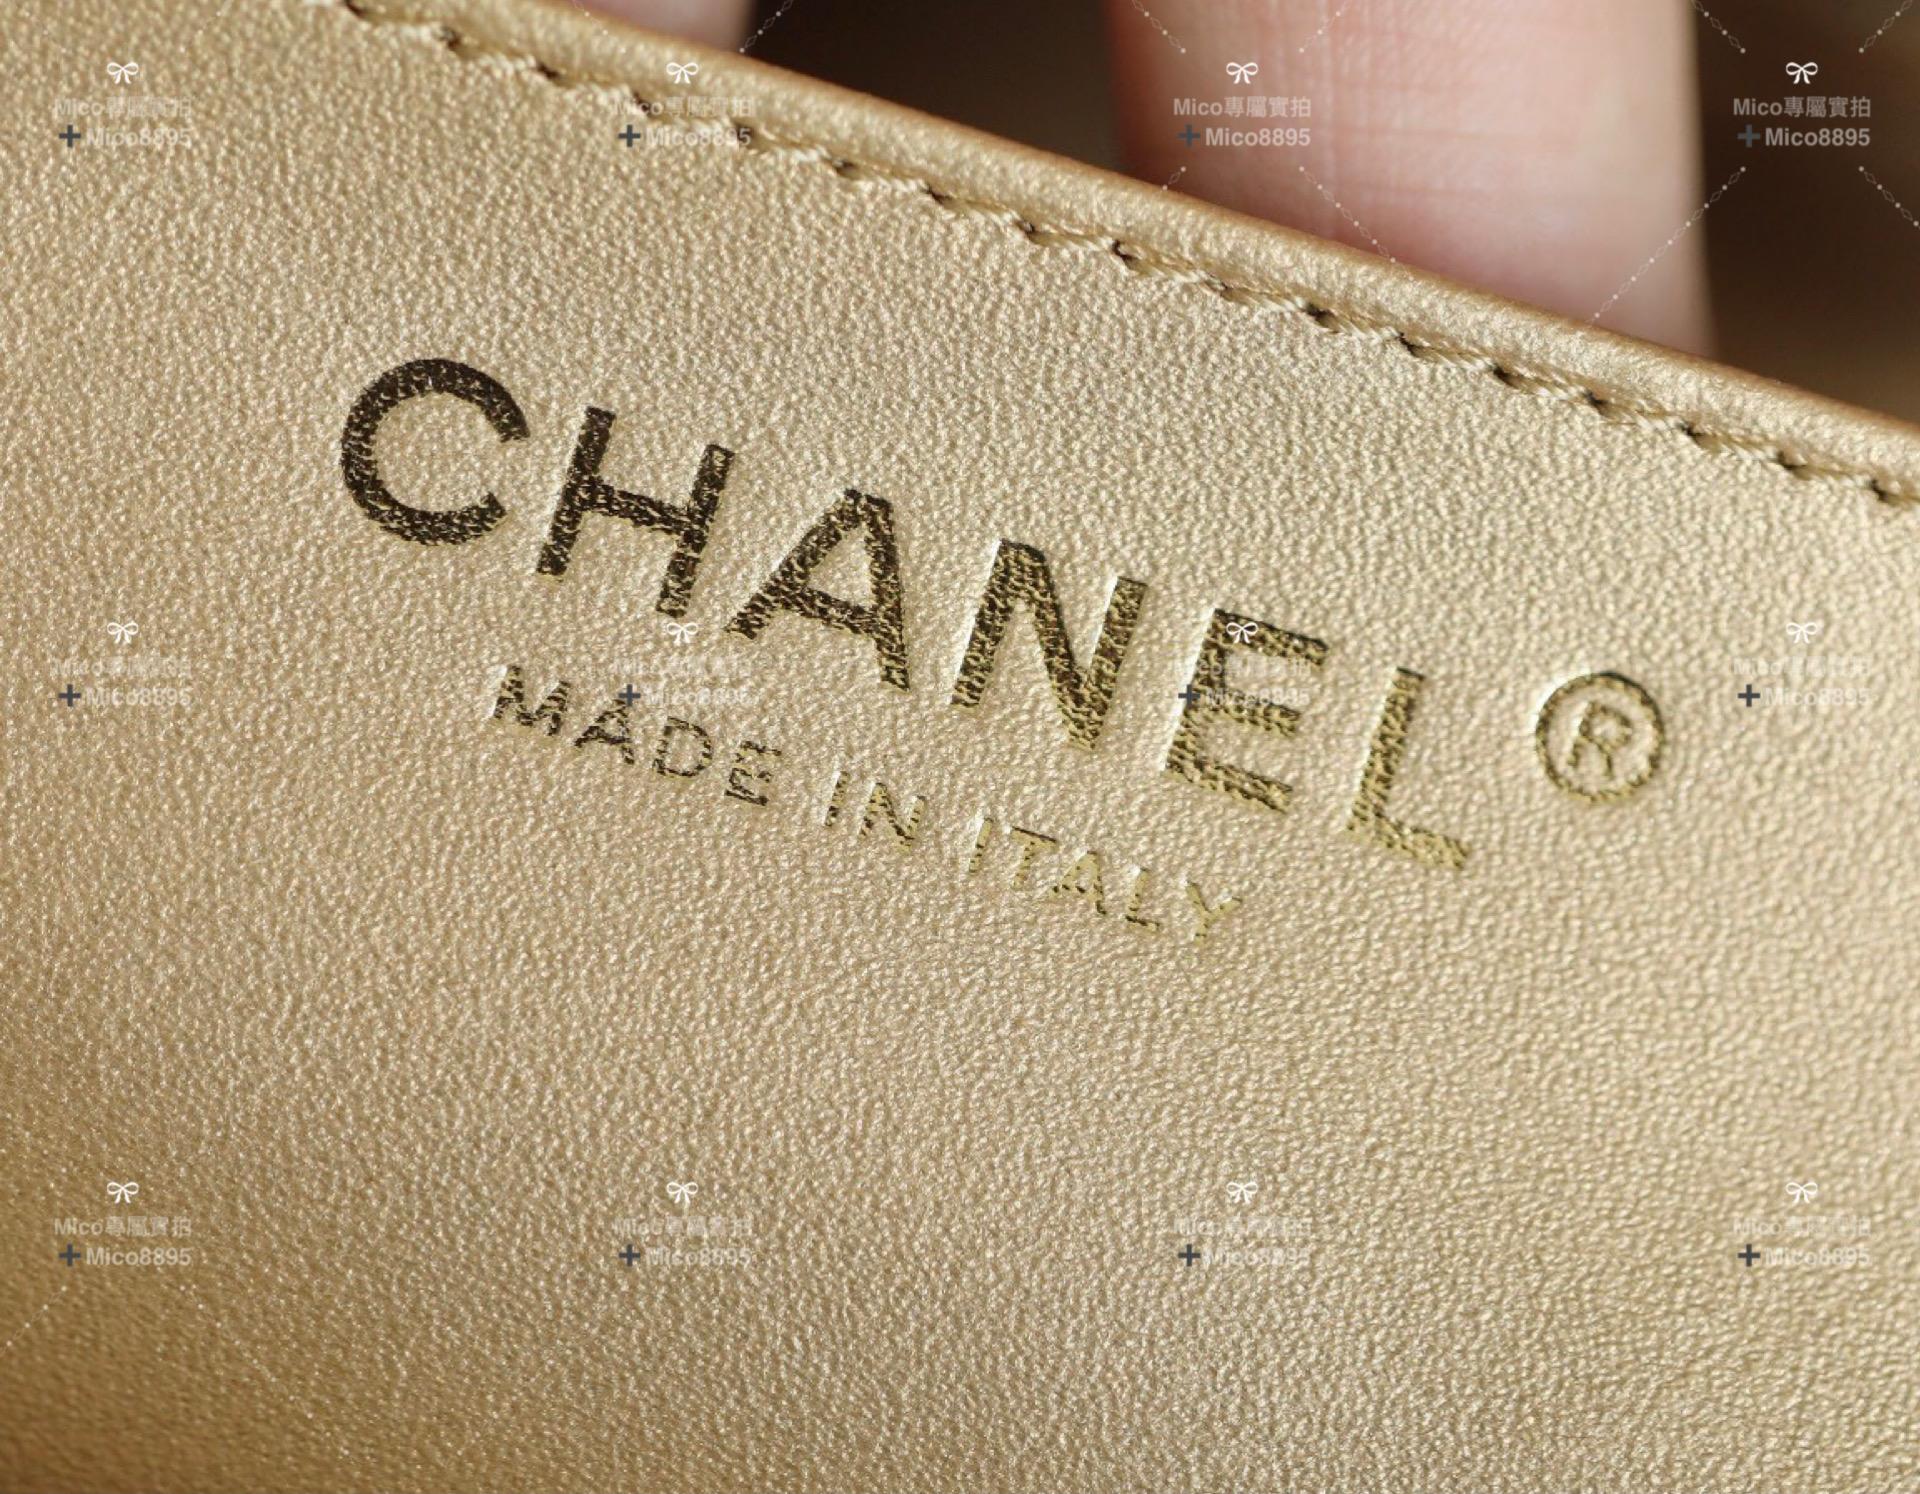 Chanel 金球系列 白色小羊皮口蓋包 進化Classic Flap革新演繹  𝐦𝐢𝐧𝐢 𝐜𝐟方胖子外觀 18cm